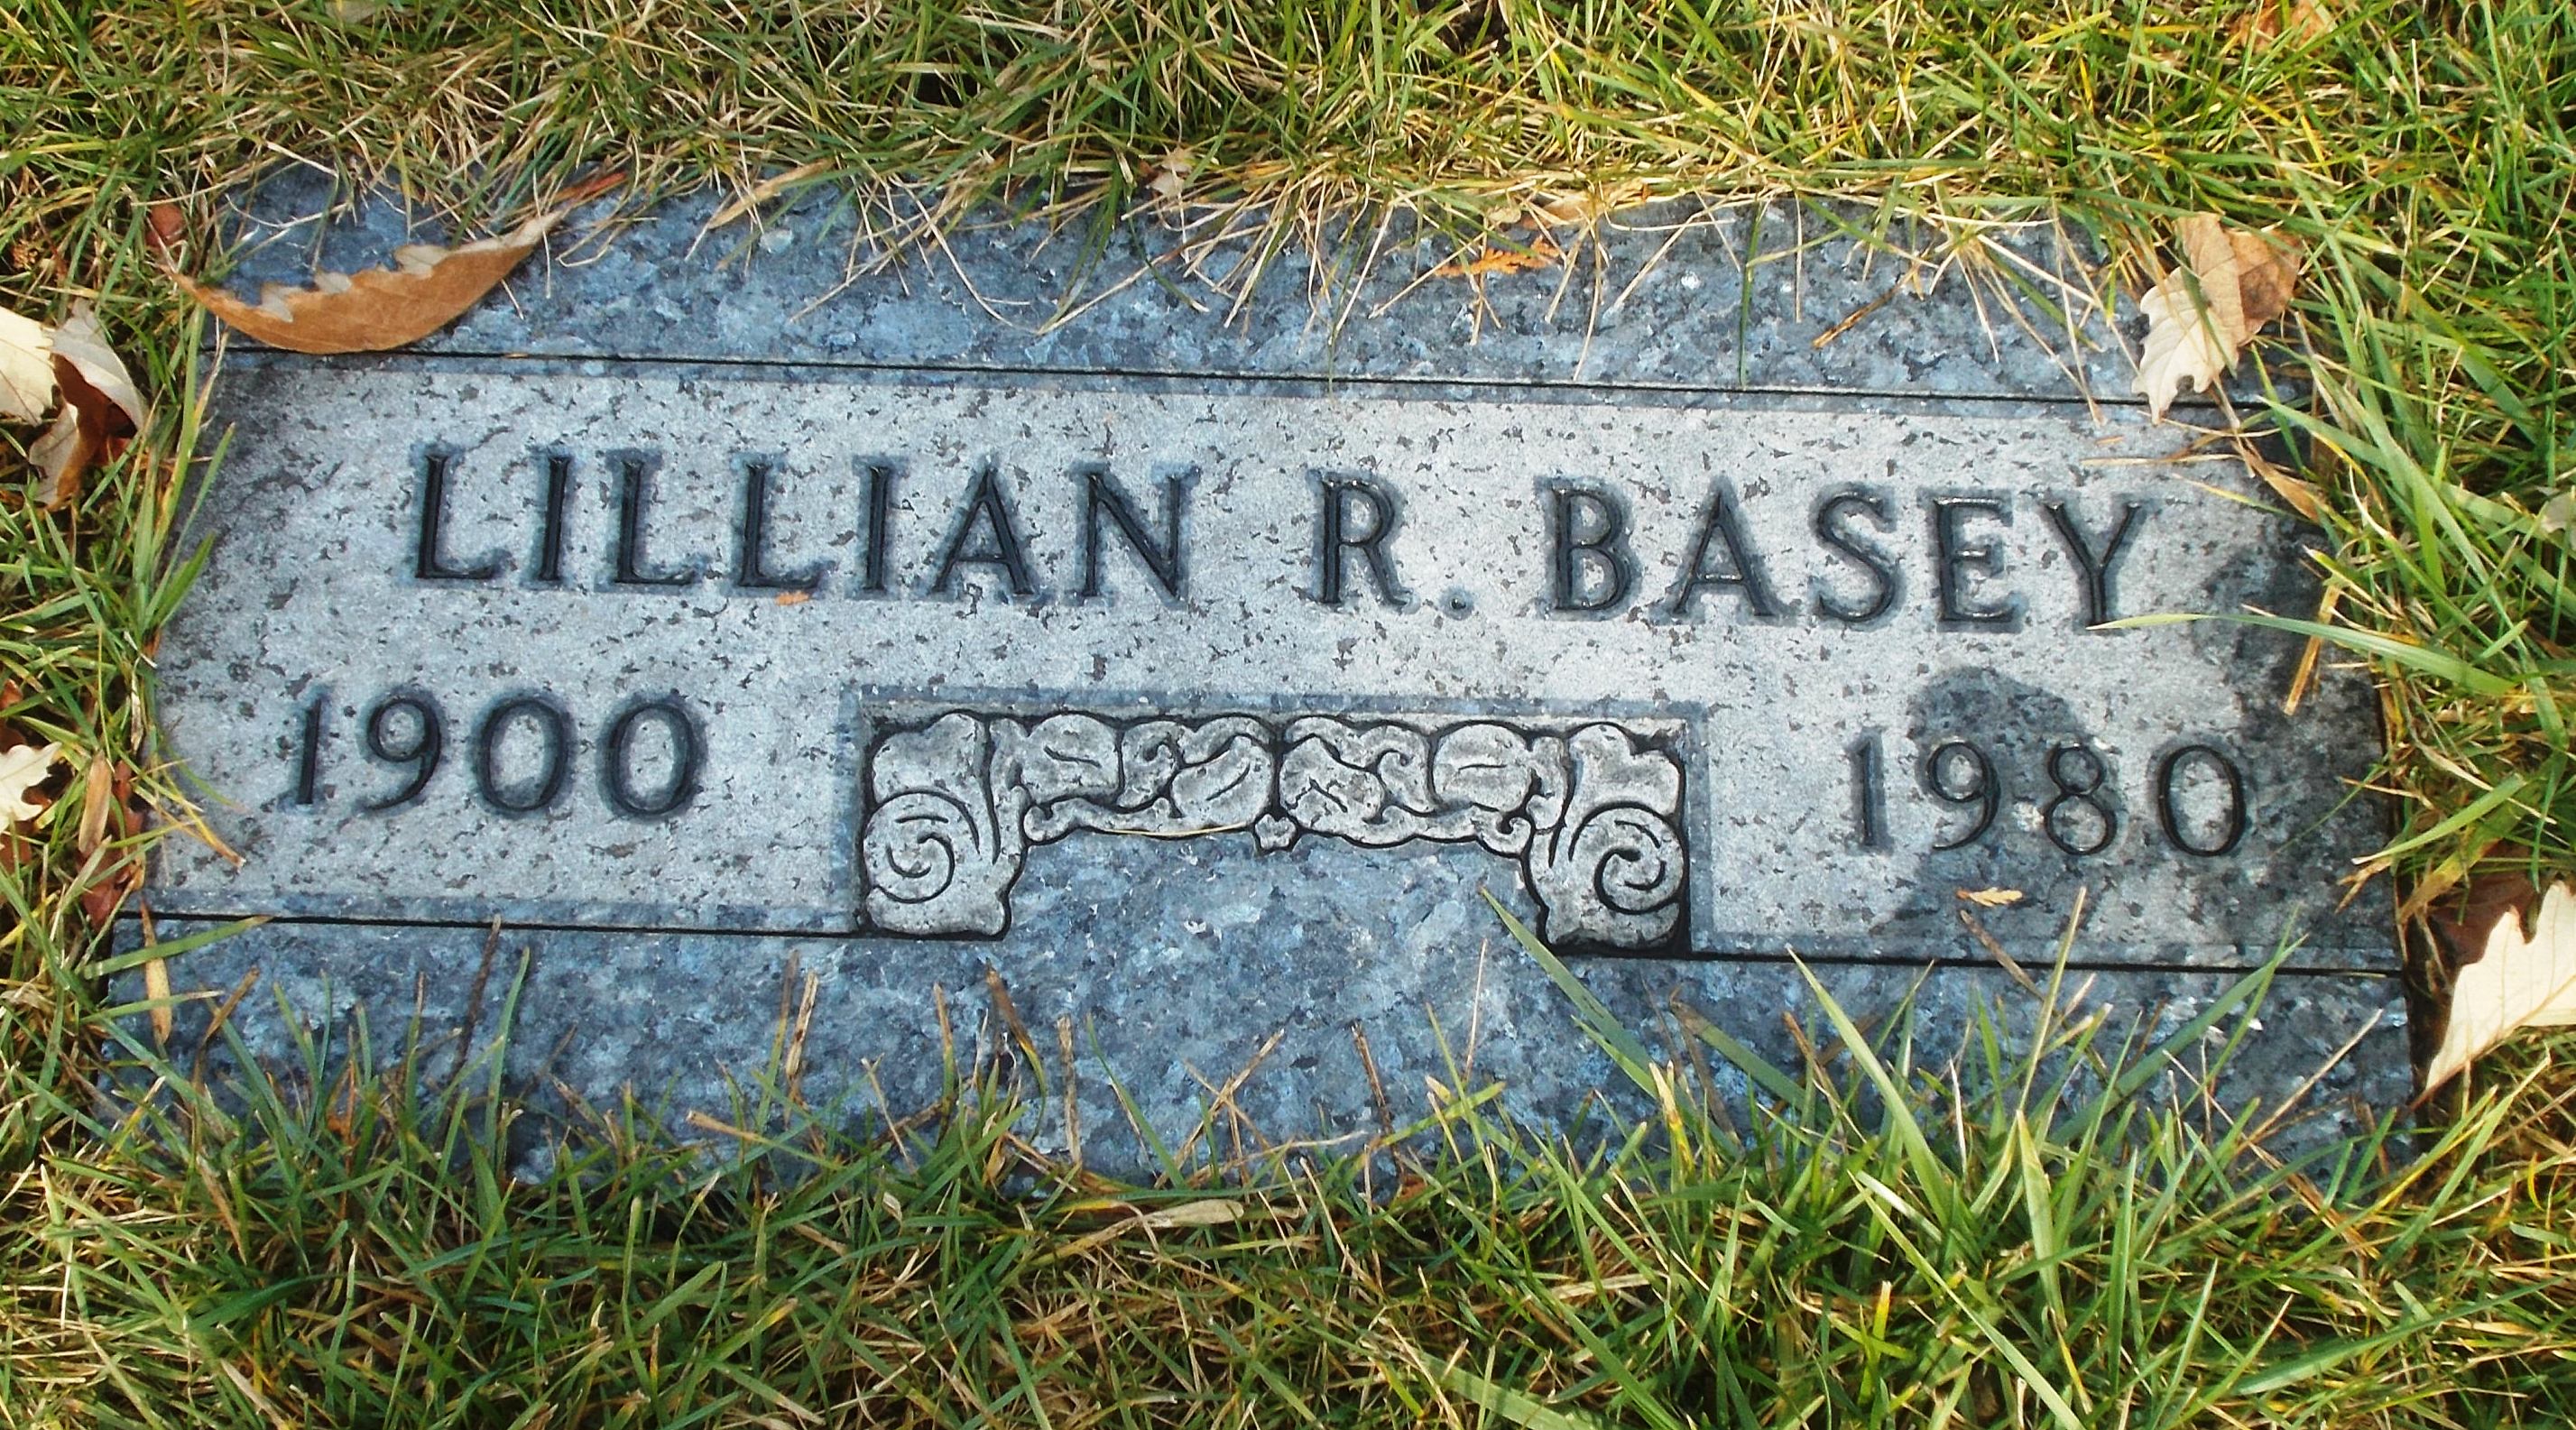 Lillian R Basey